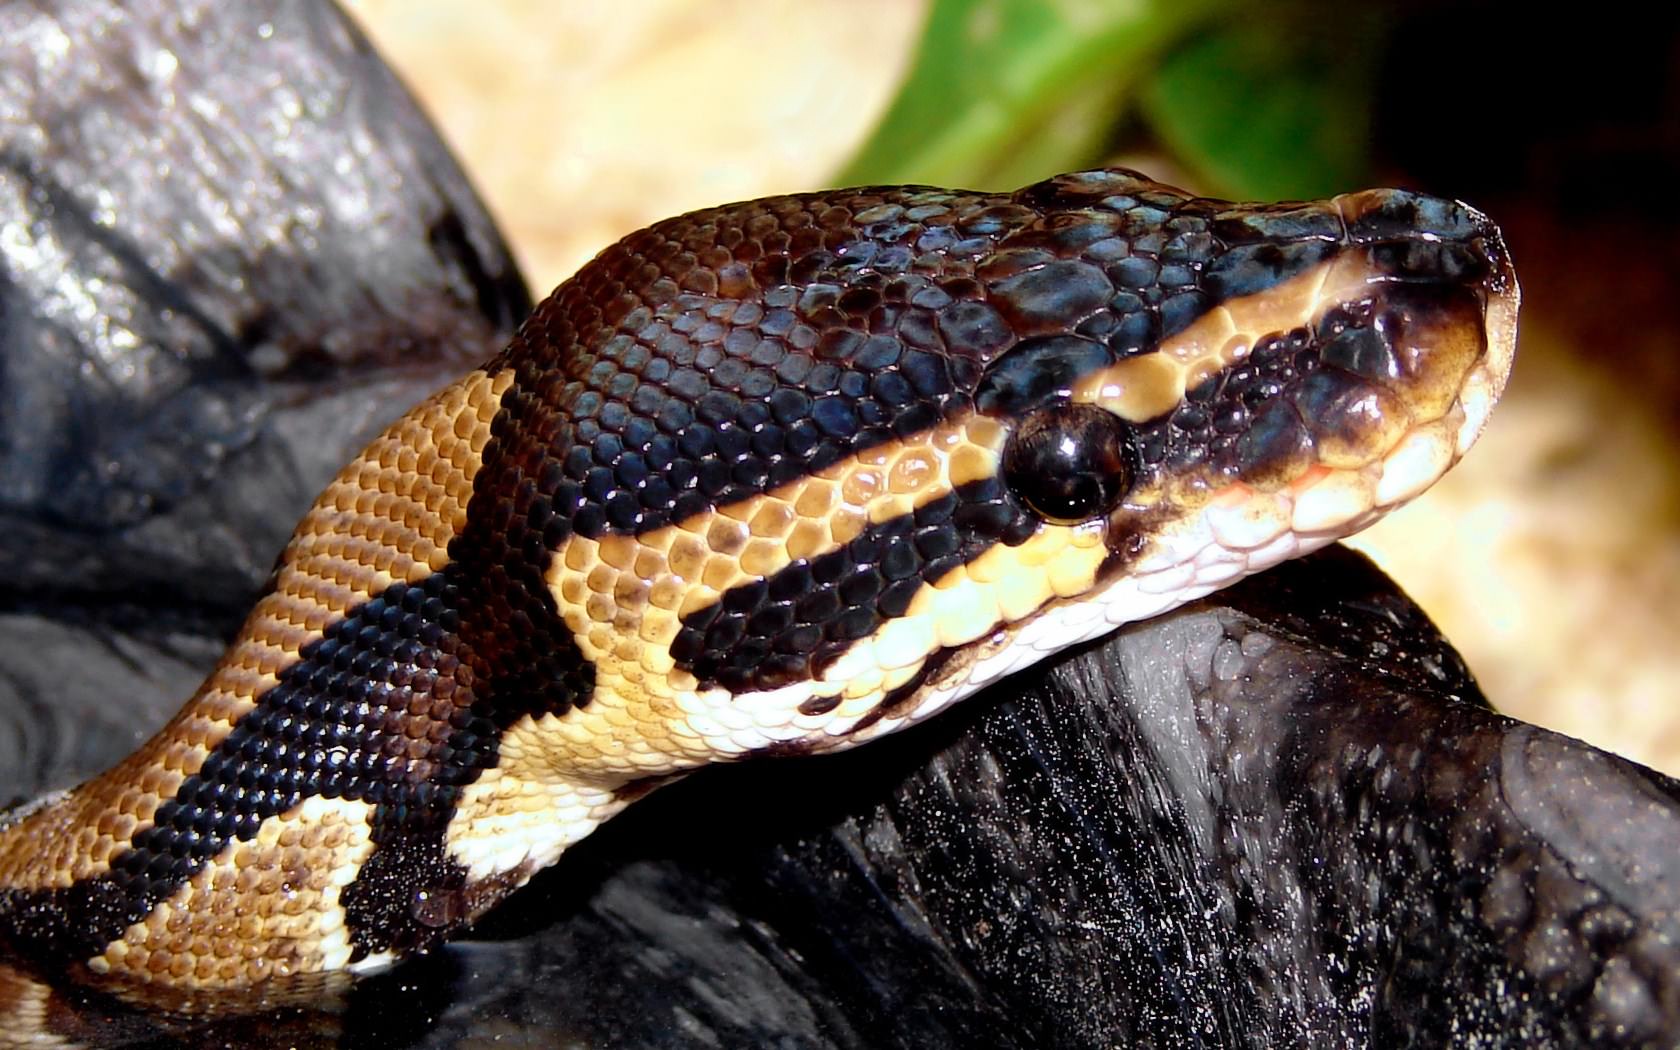 Serpents Python Royal